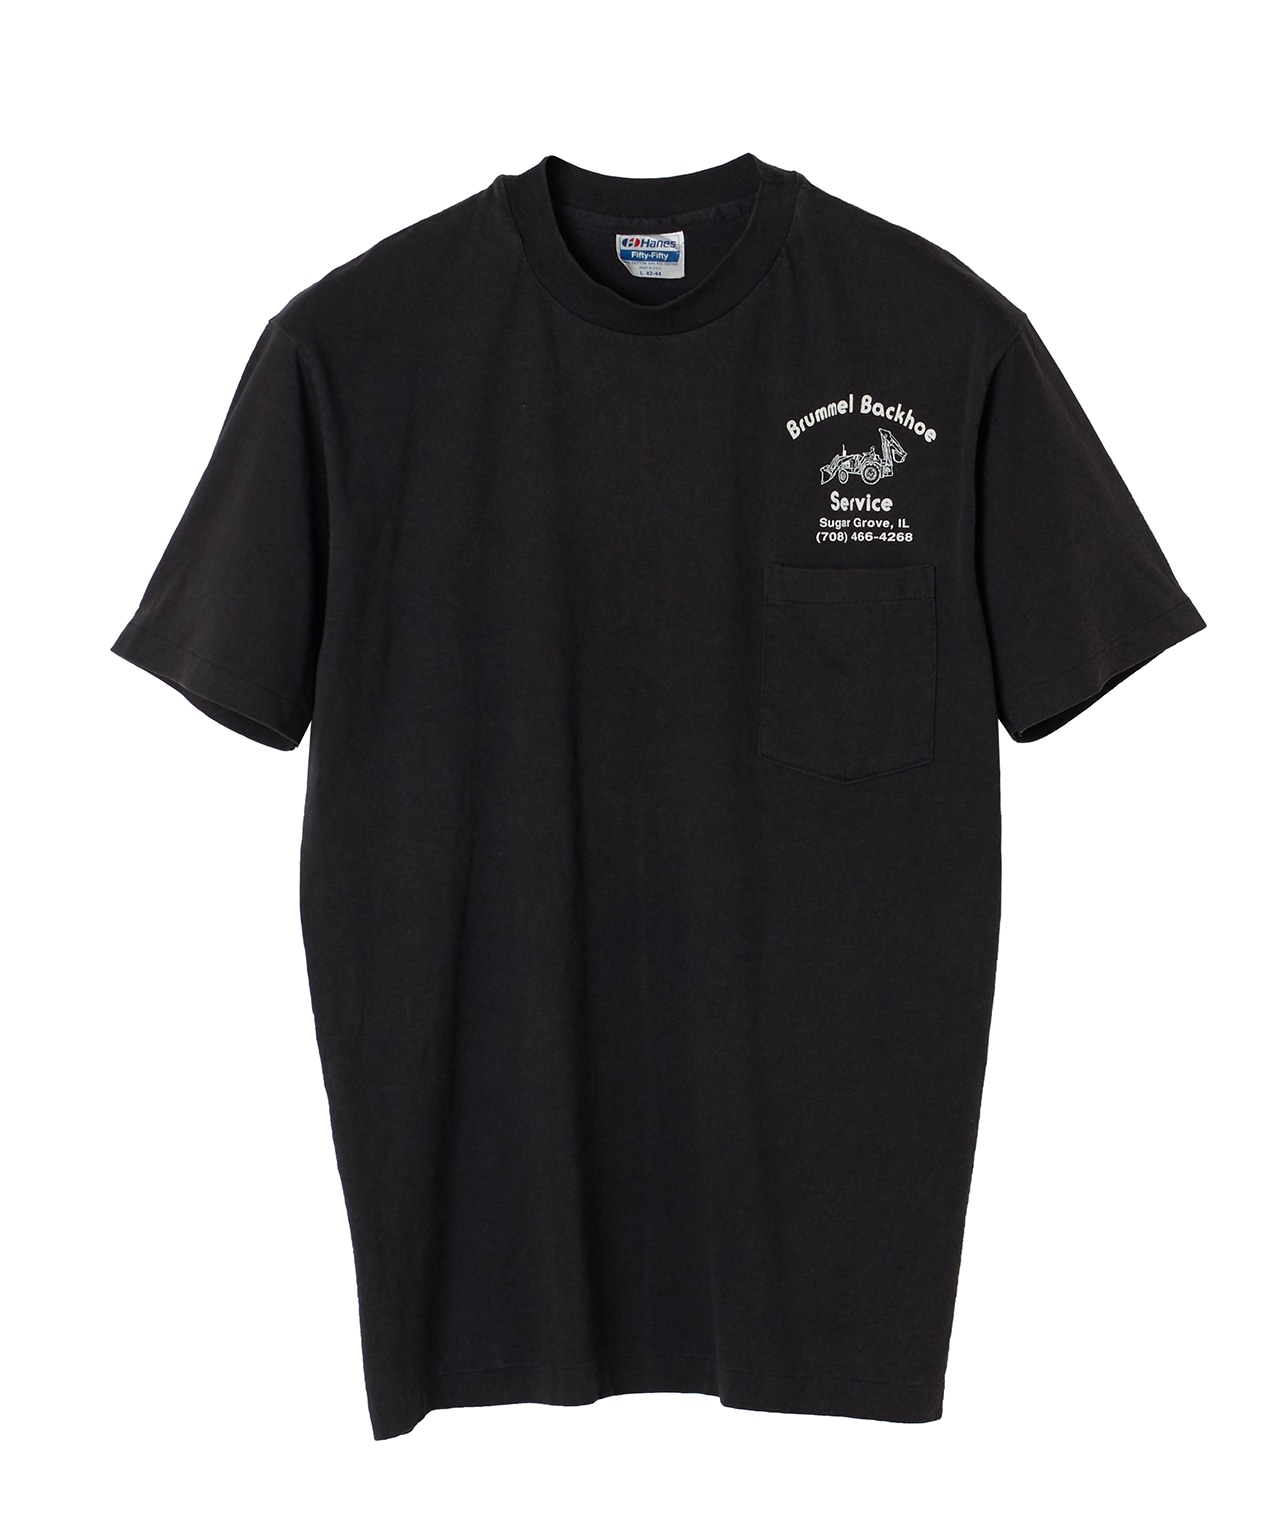 USED/Brummel Backhoe ServiceプリントTシャツ 詳細画像 ブラック 1